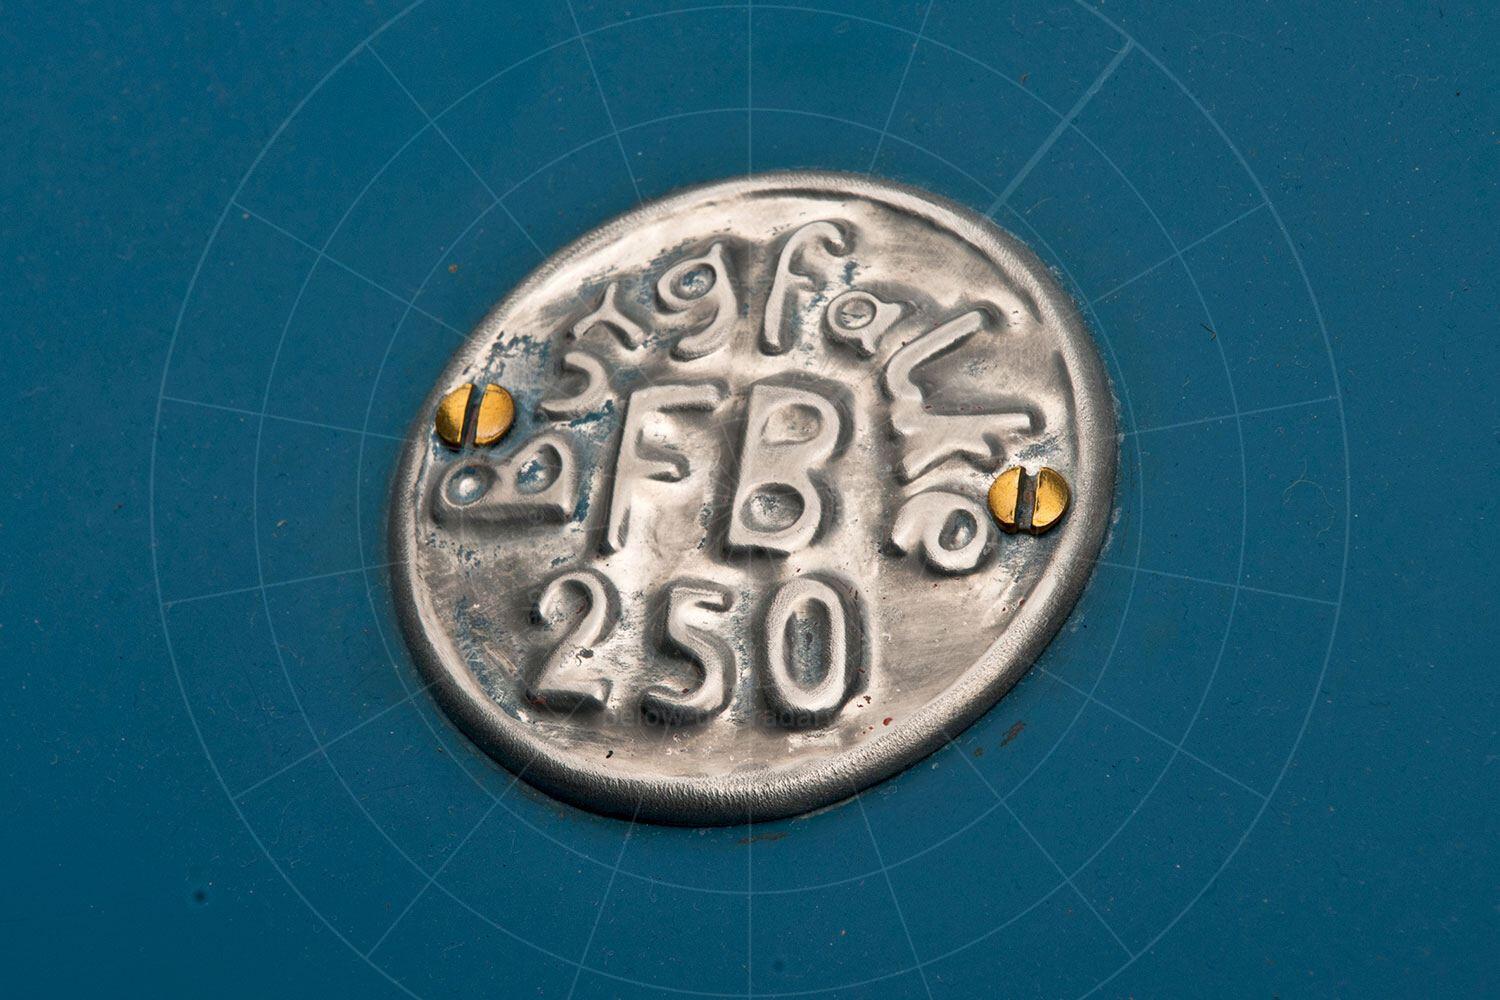 Burgfalke FB250 badge Pic: RM Sotheby's | Burgfalke FB250 badge